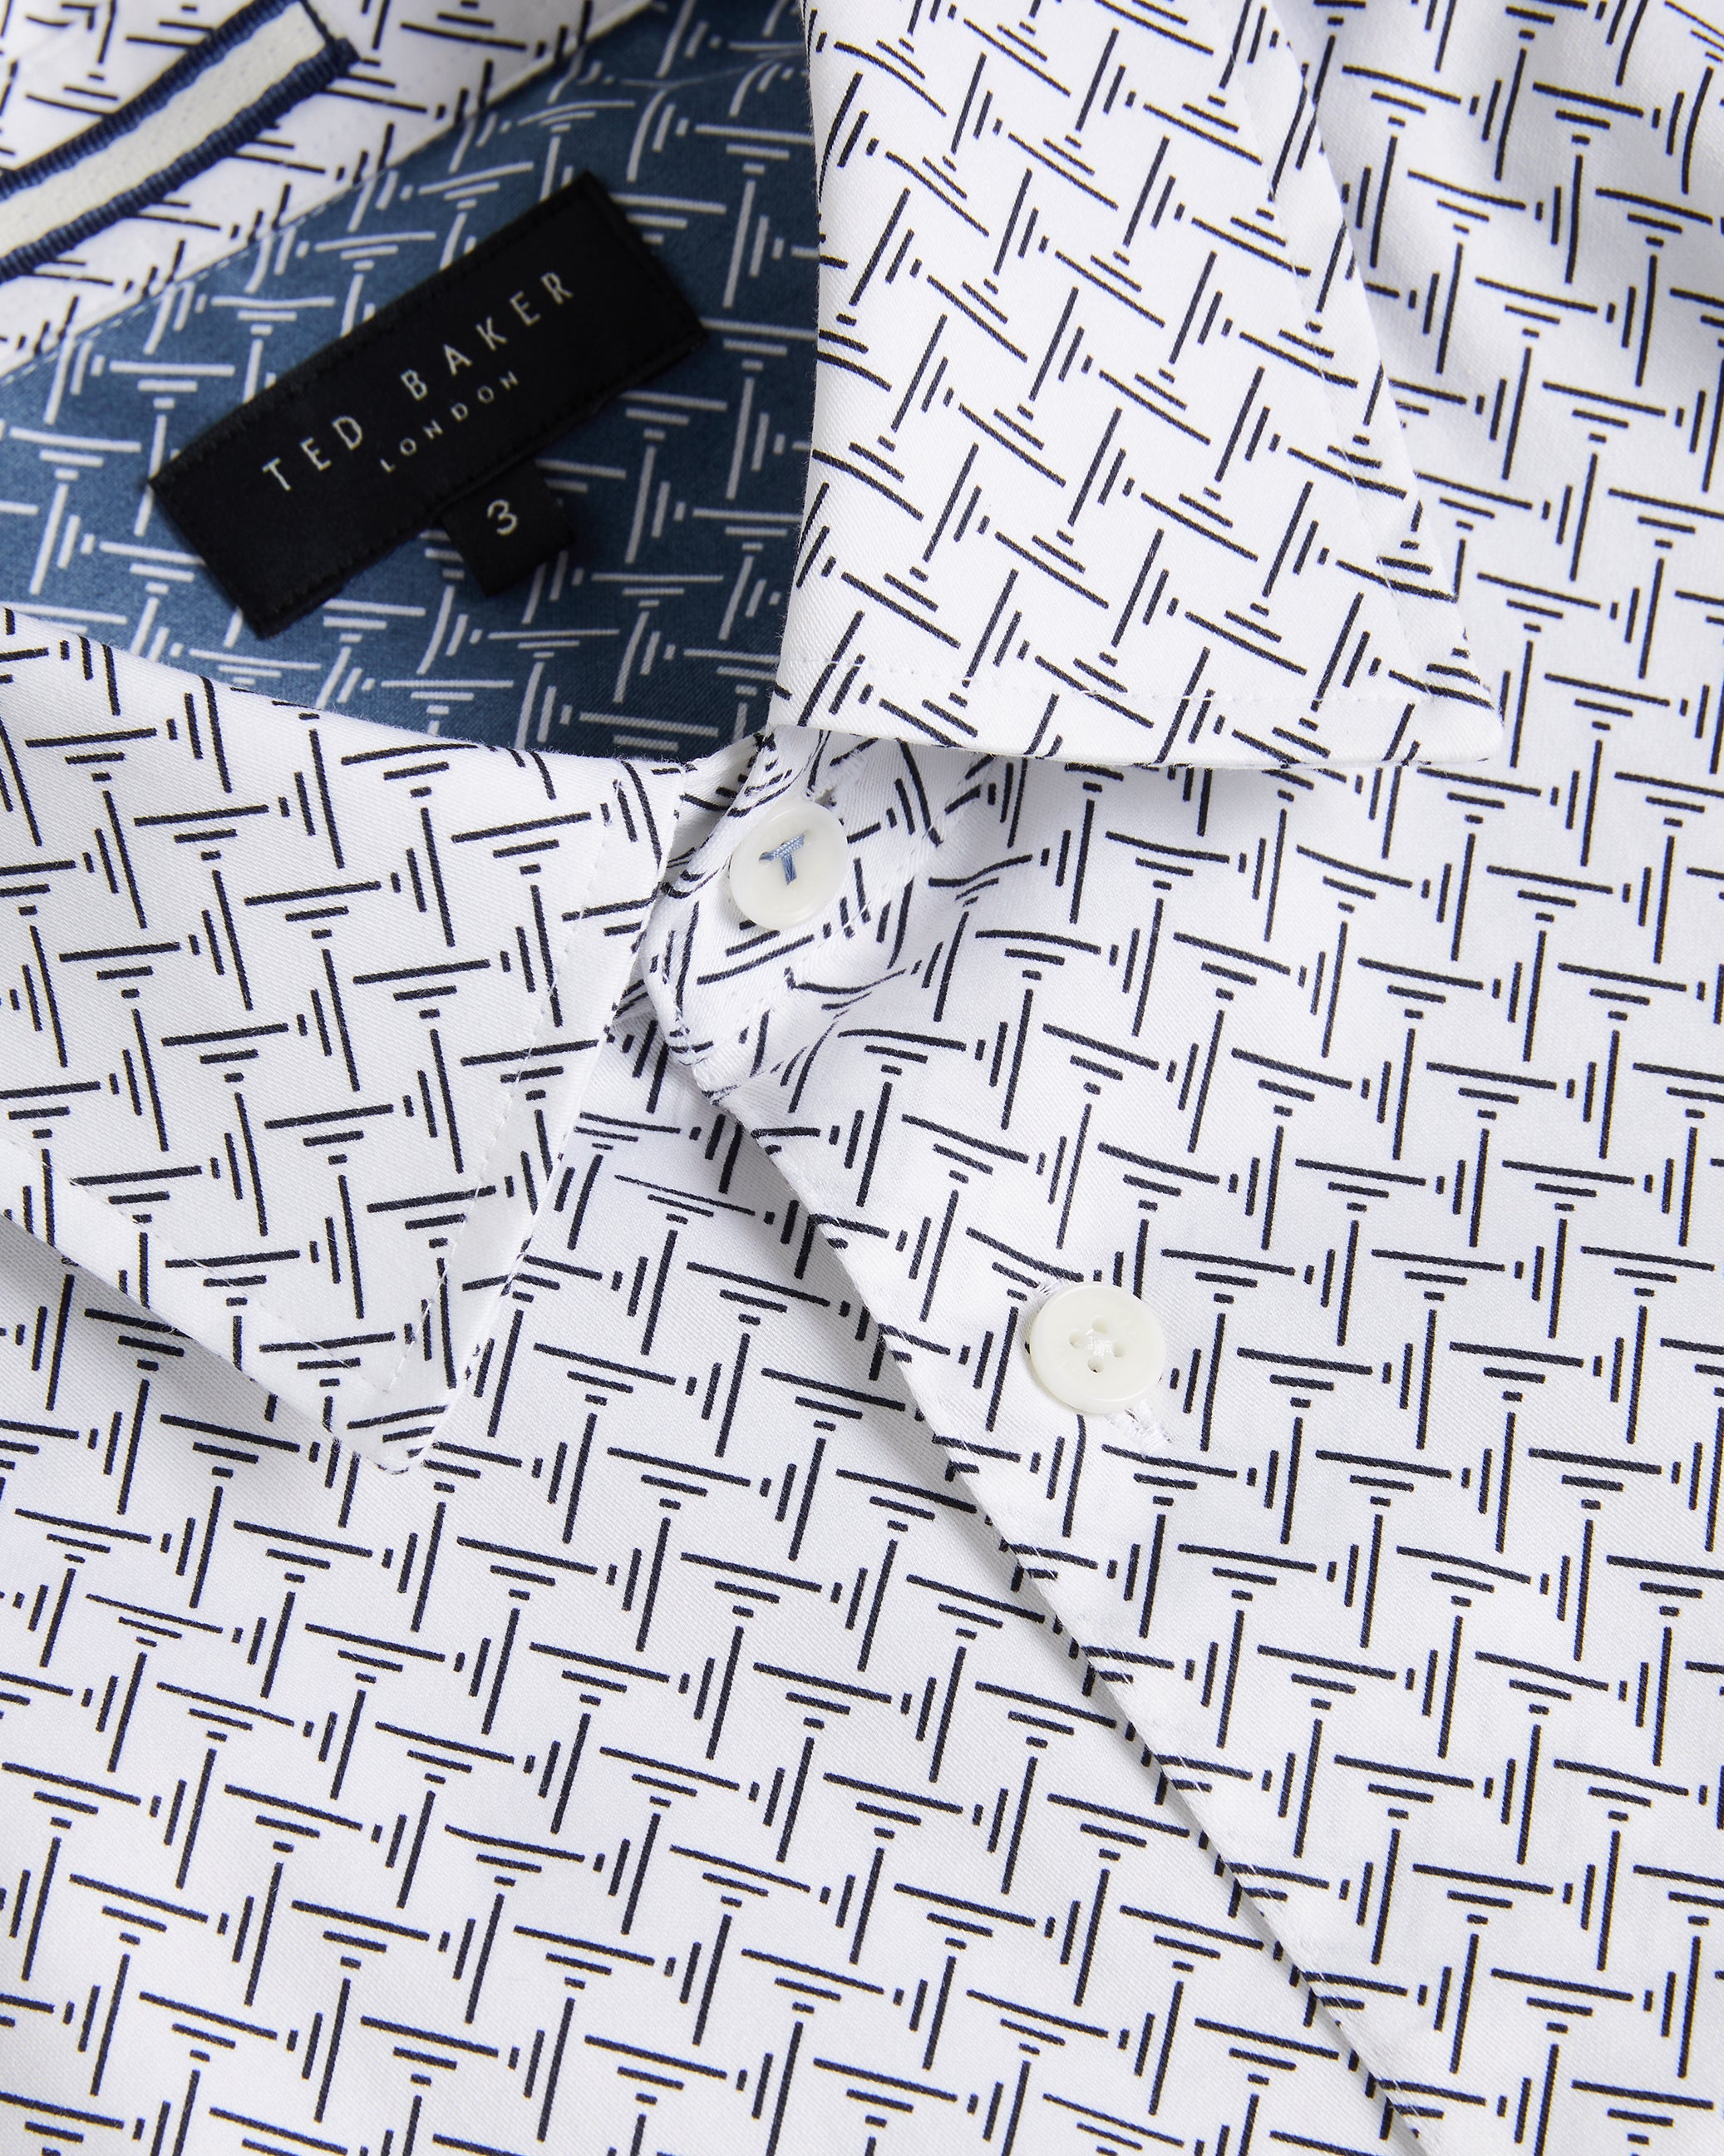 Willuw Long Sleeve Geometric Print Shirt White